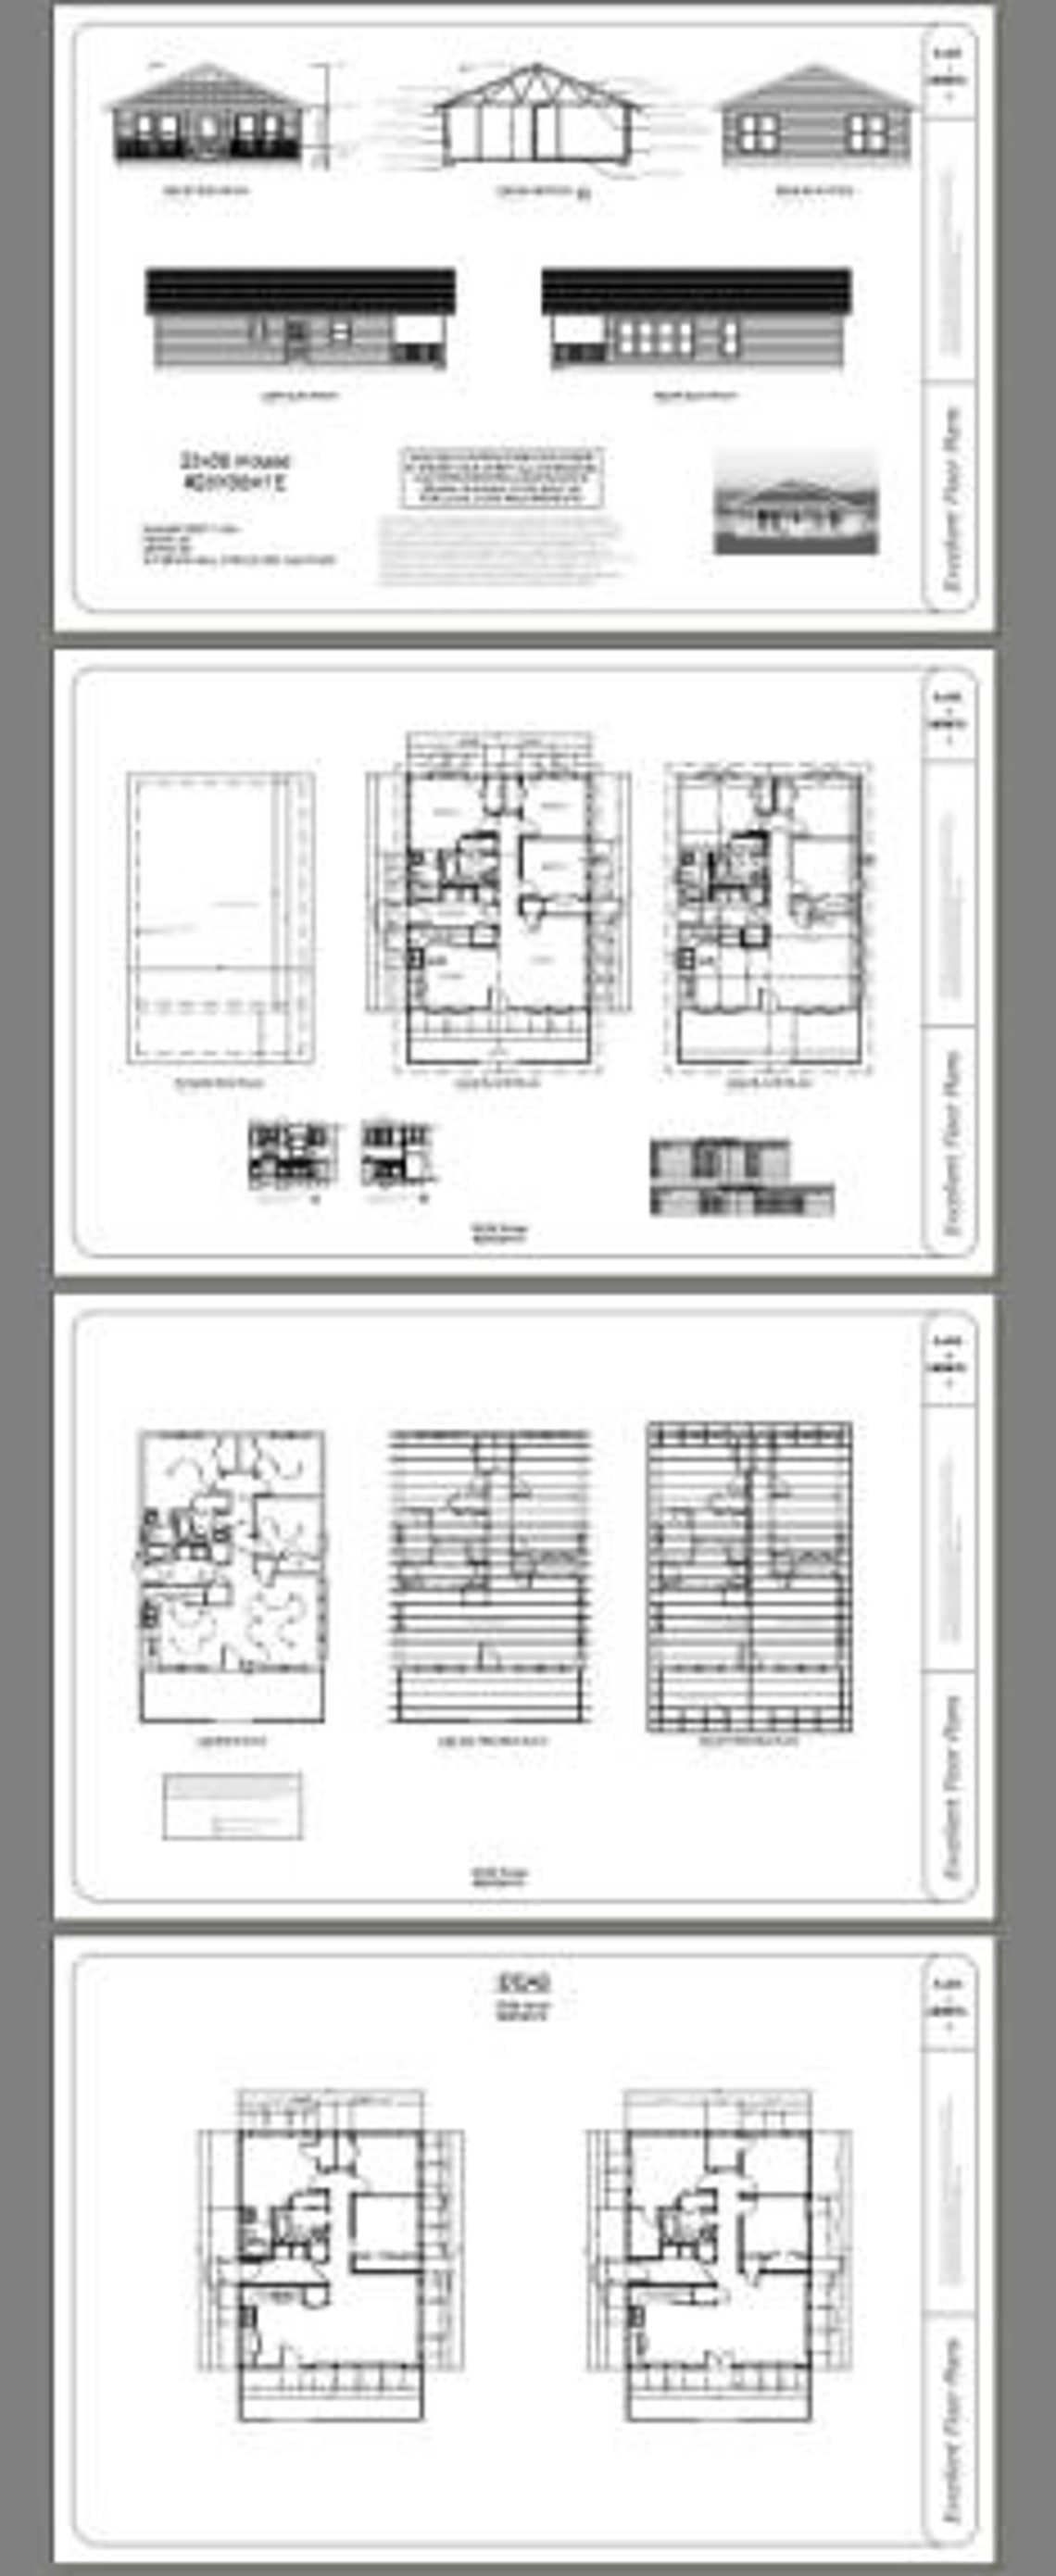 28x36 House 3-bedroom 2-bath 1,008 Sq Ft PDF Floor Plan Instant ...